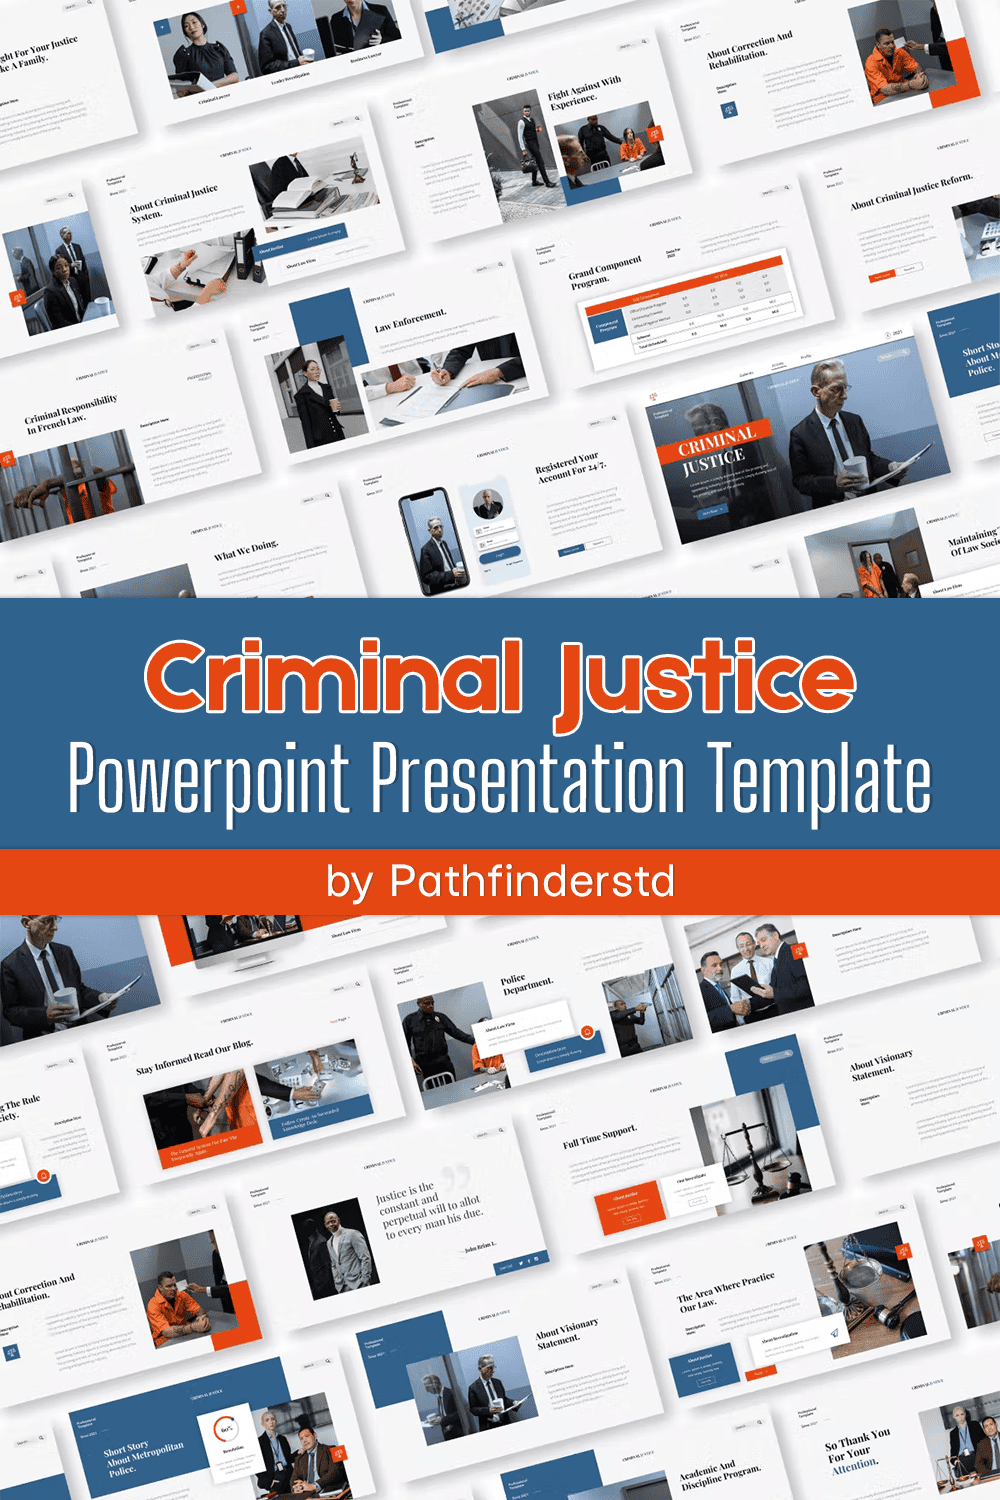 Criminal justice powerpoint presentation template of pinterest.